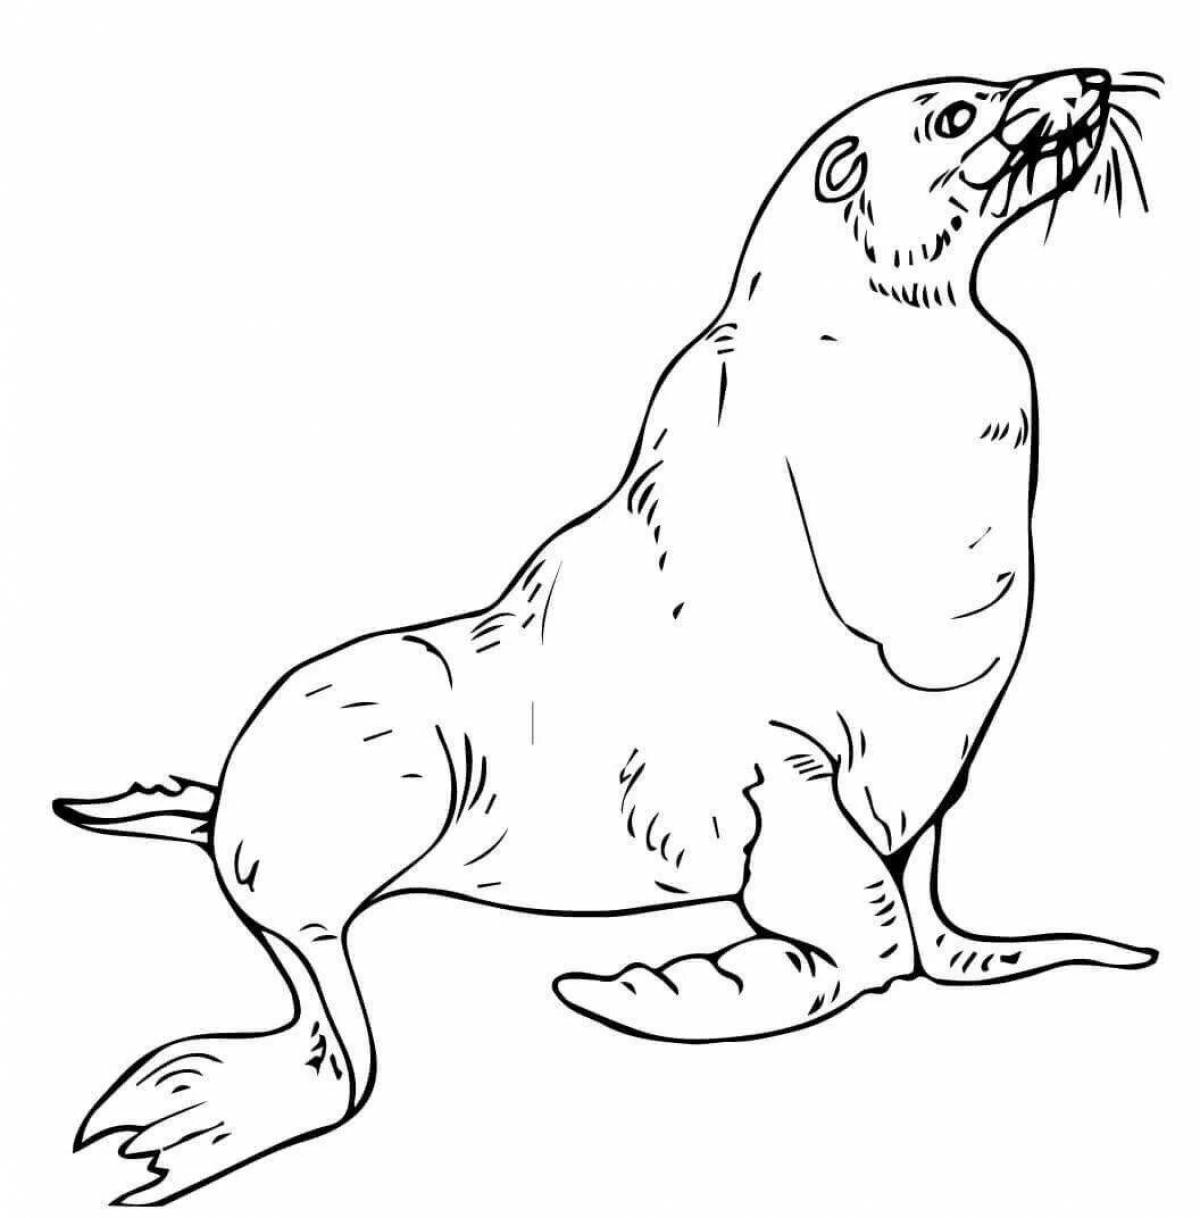 Coloring page elegant sea lion